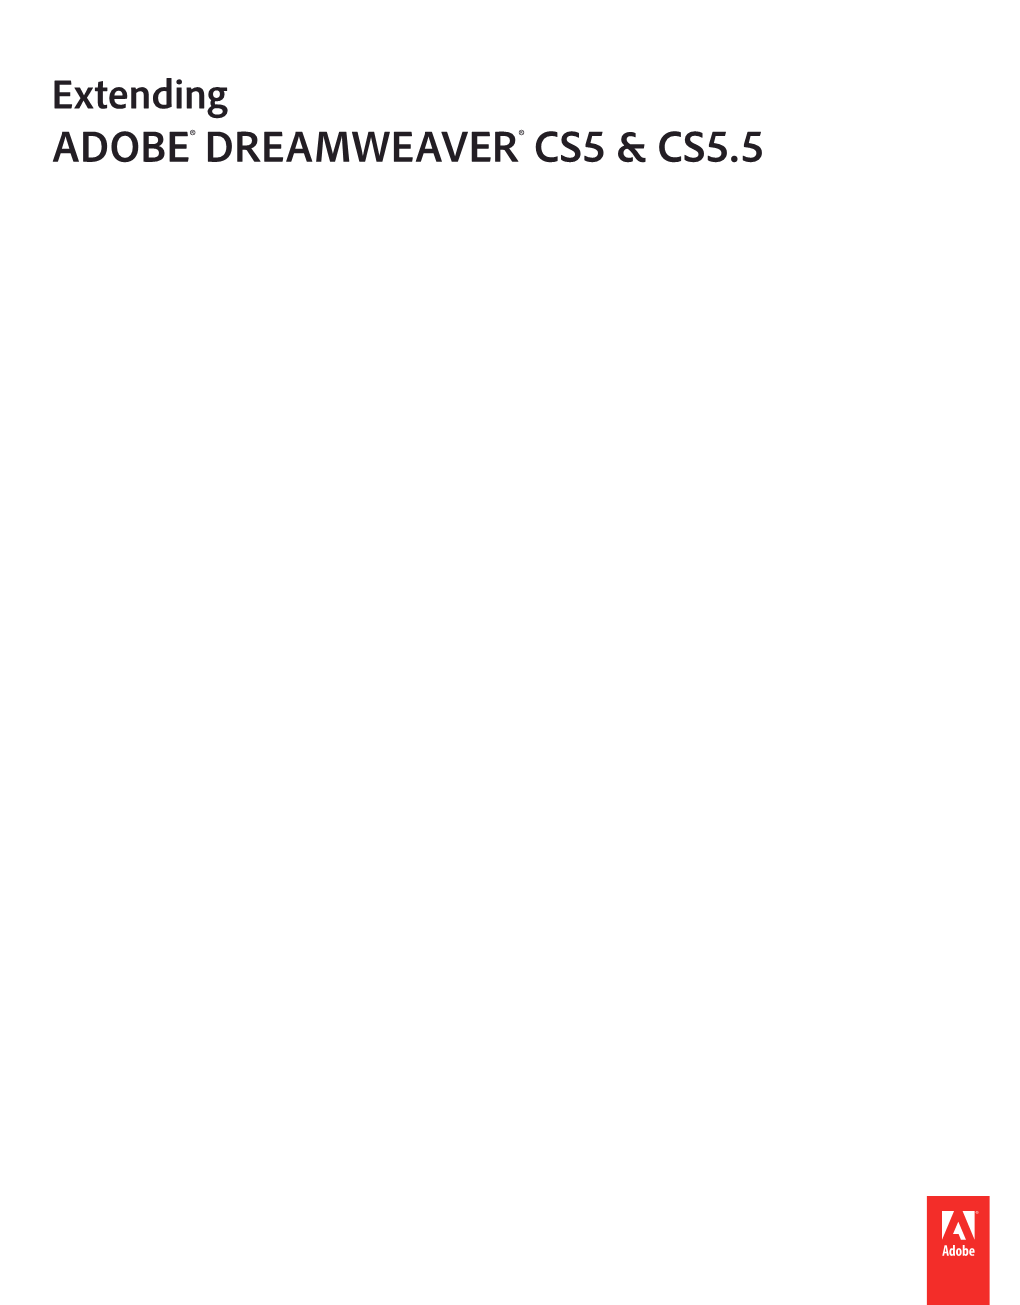 Extending Dreamweaver Types of Dreamweaver Extensions